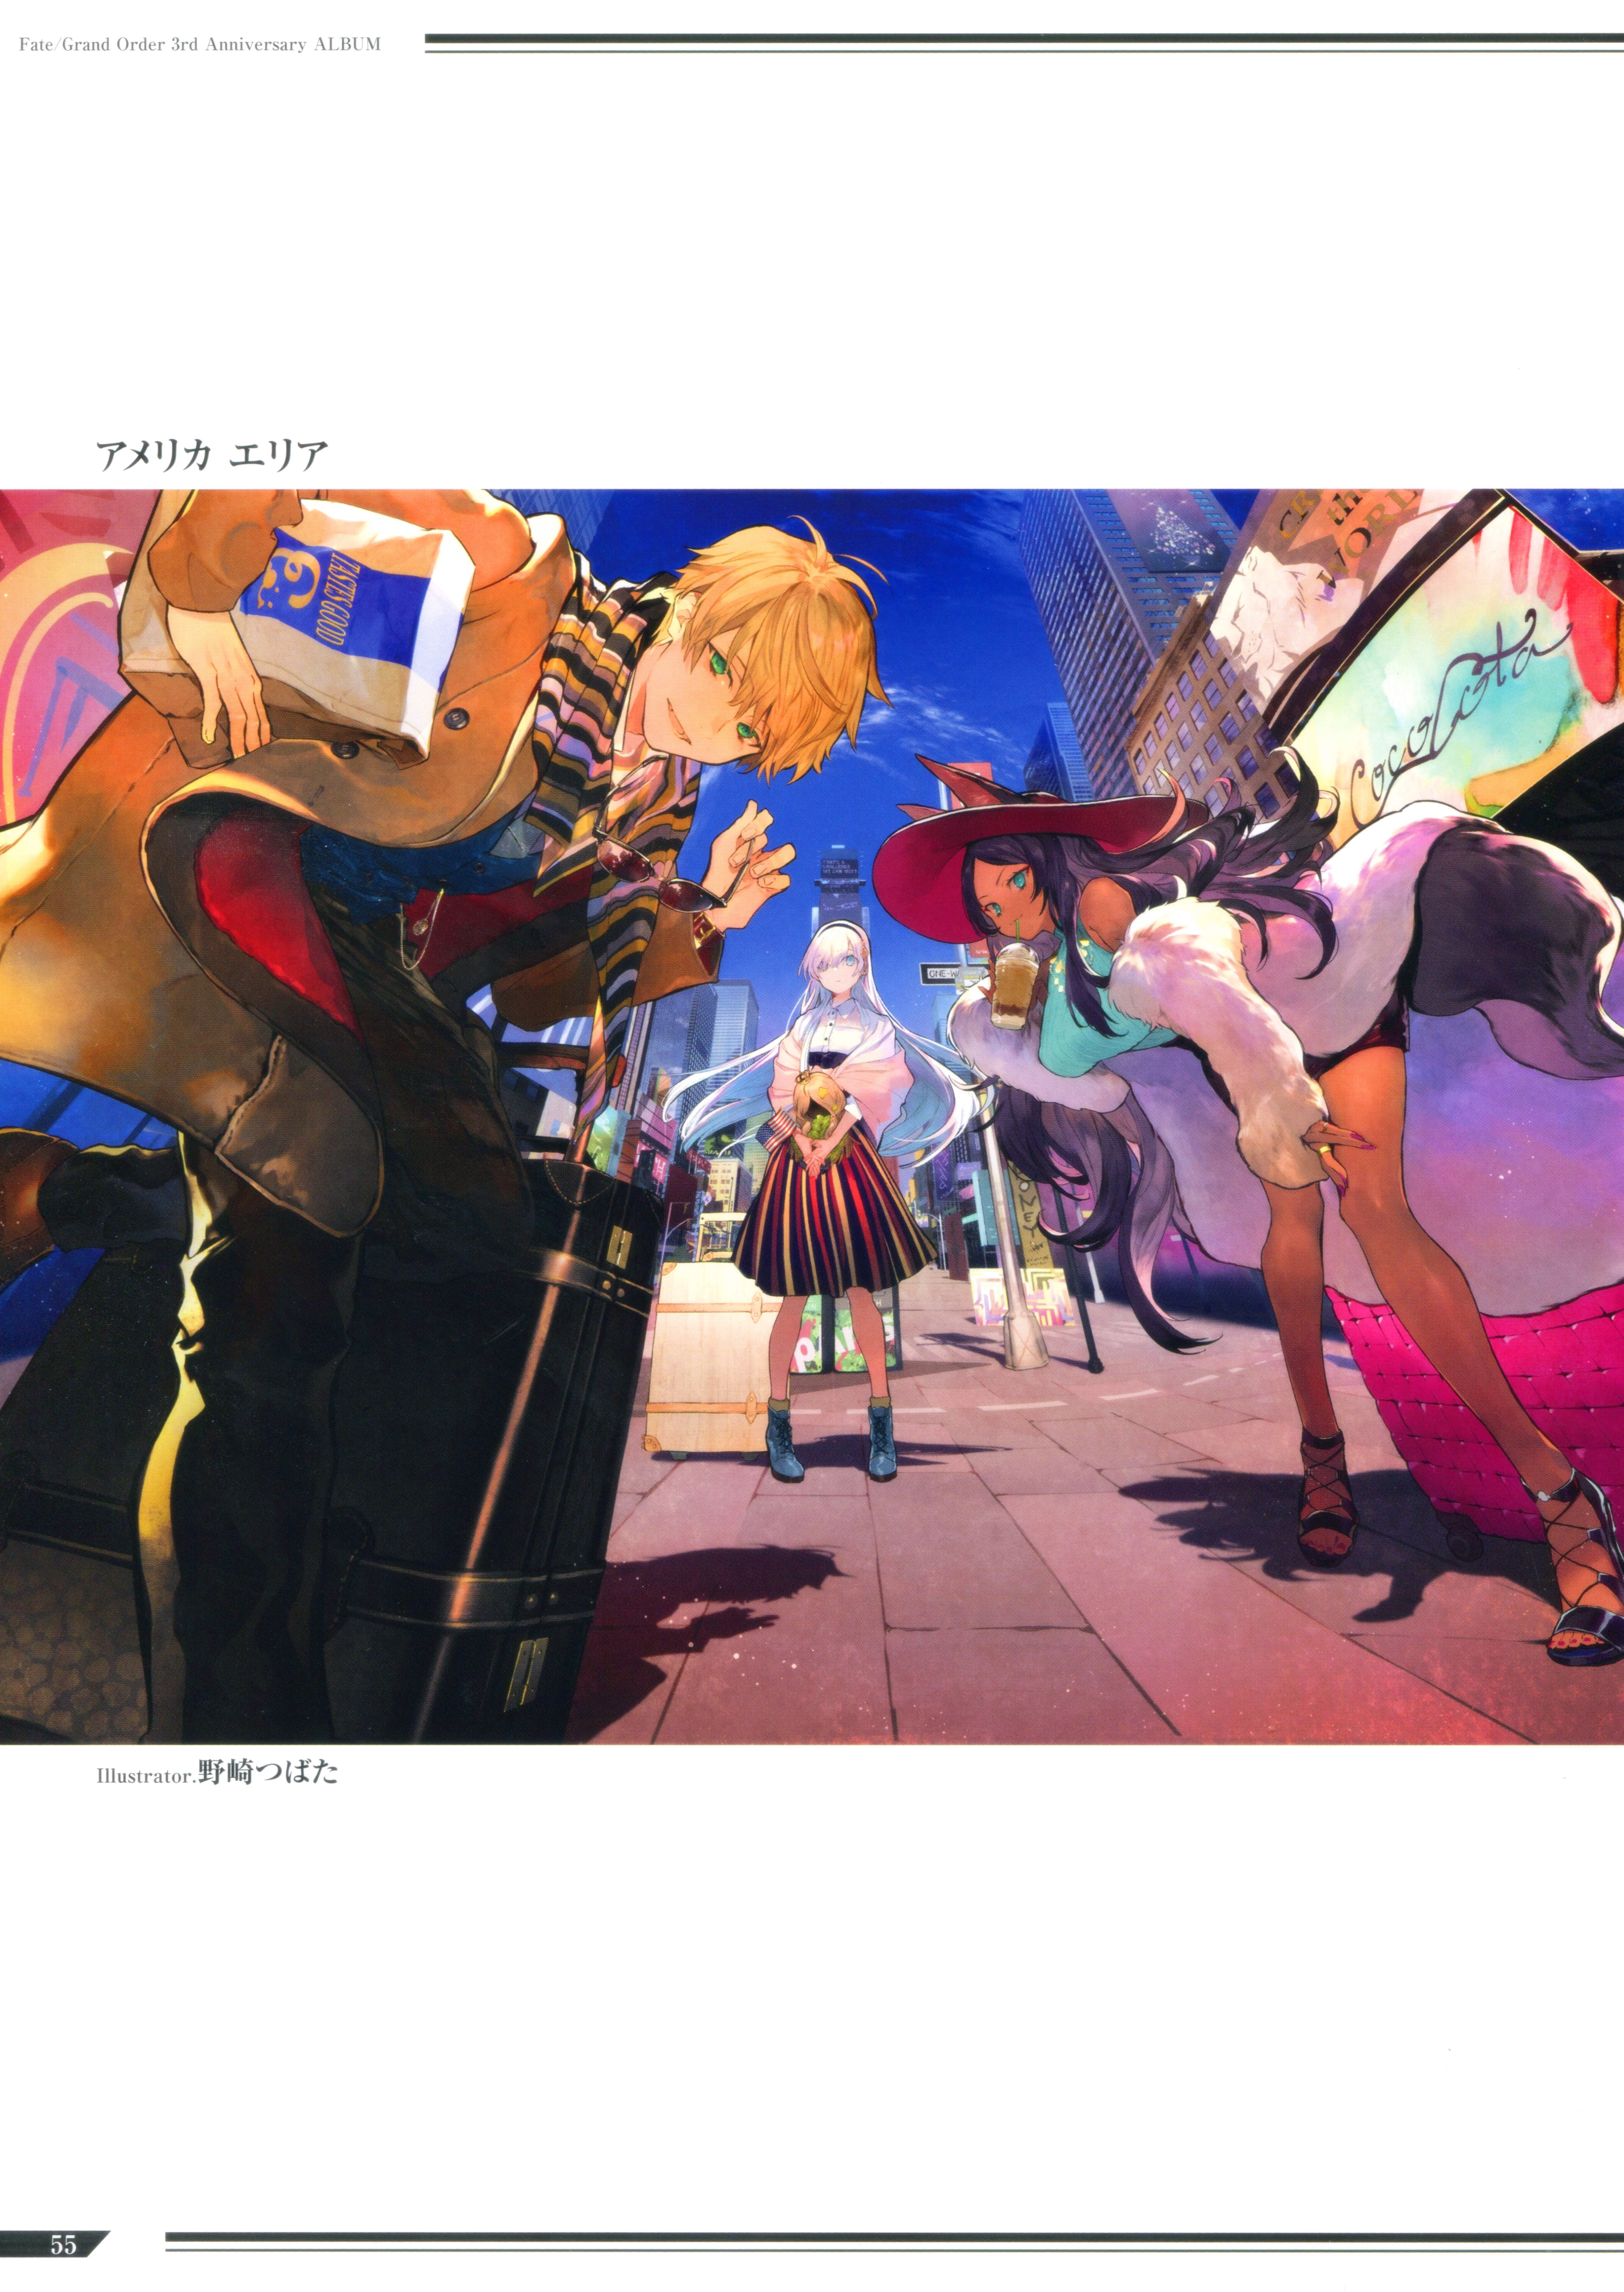 Fate Grand Order Fes 18 3rd Anniversary Album Acfun弹幕视频网 认真你就输啦 W ノ つロ